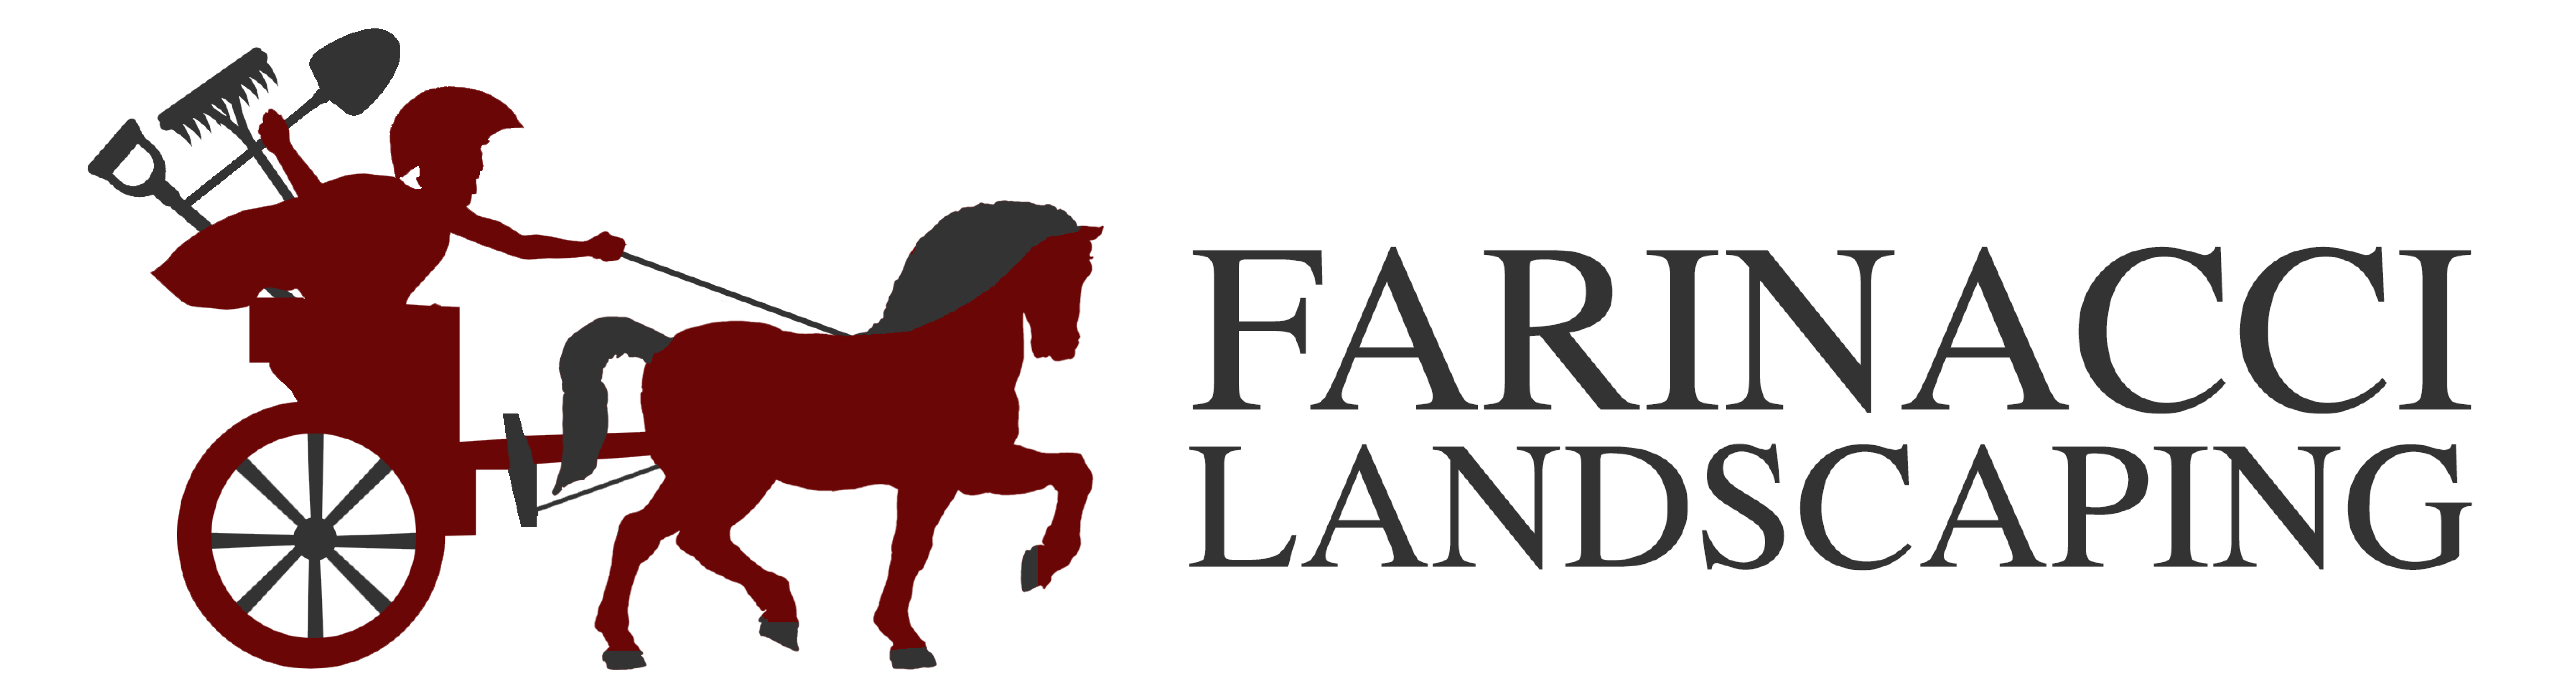 Farinacci Landscaping